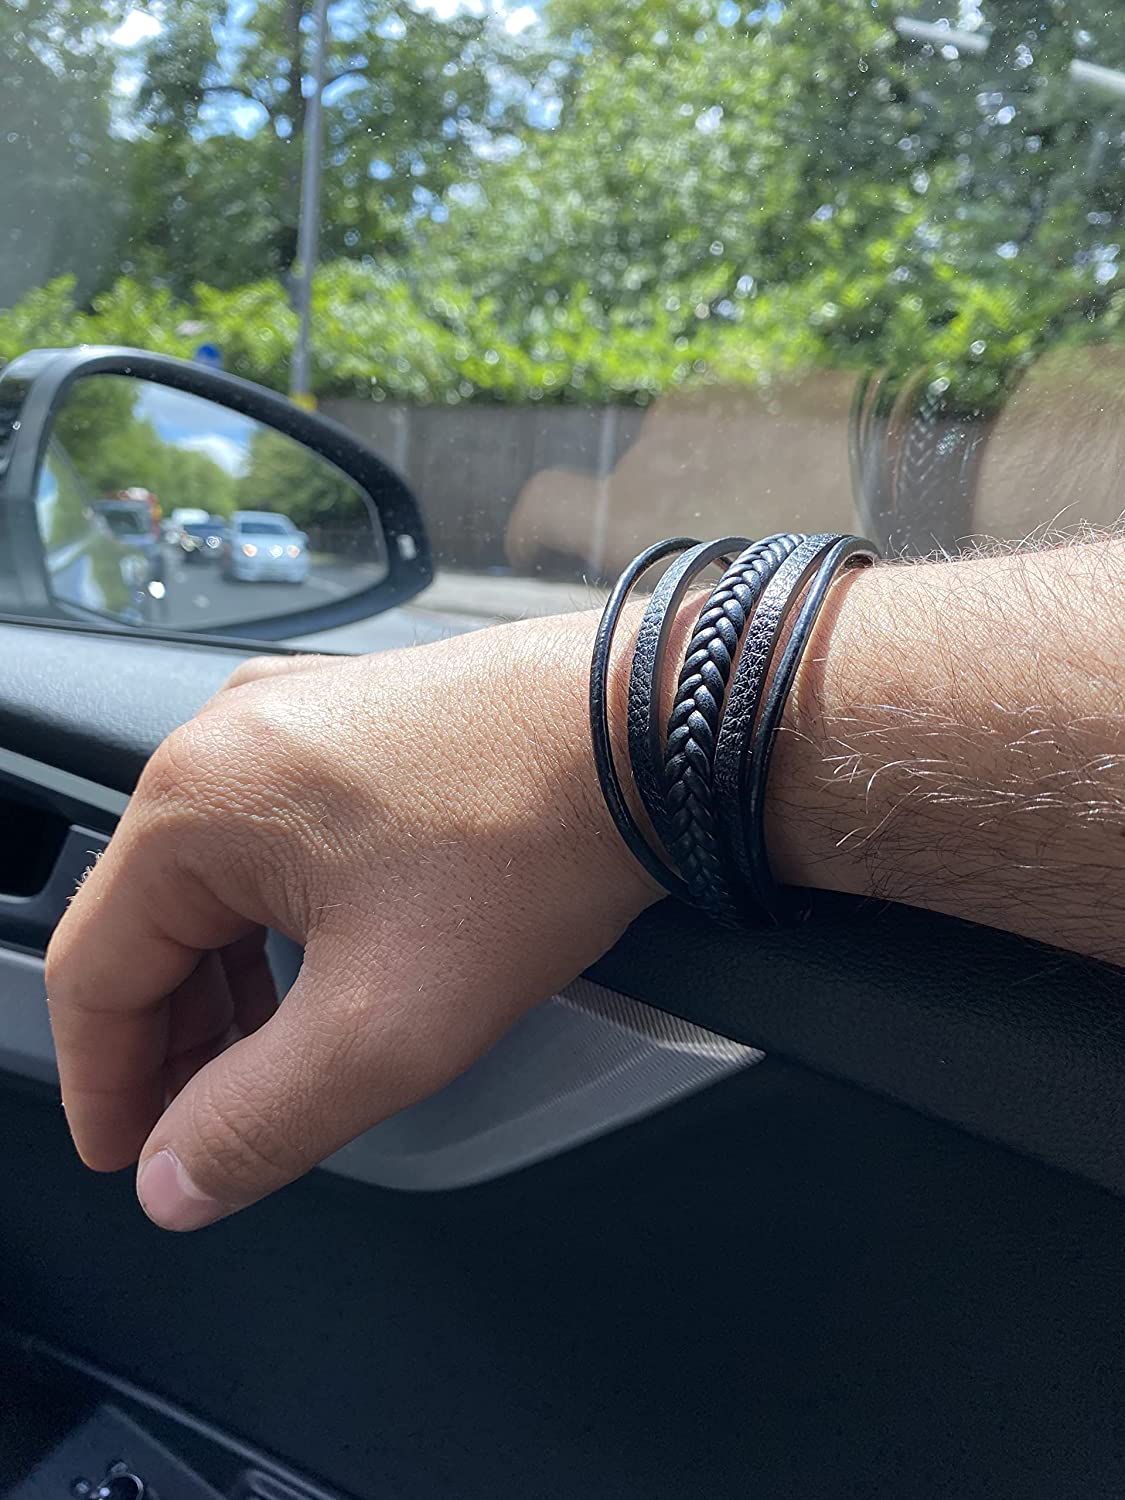 leather bracelet men